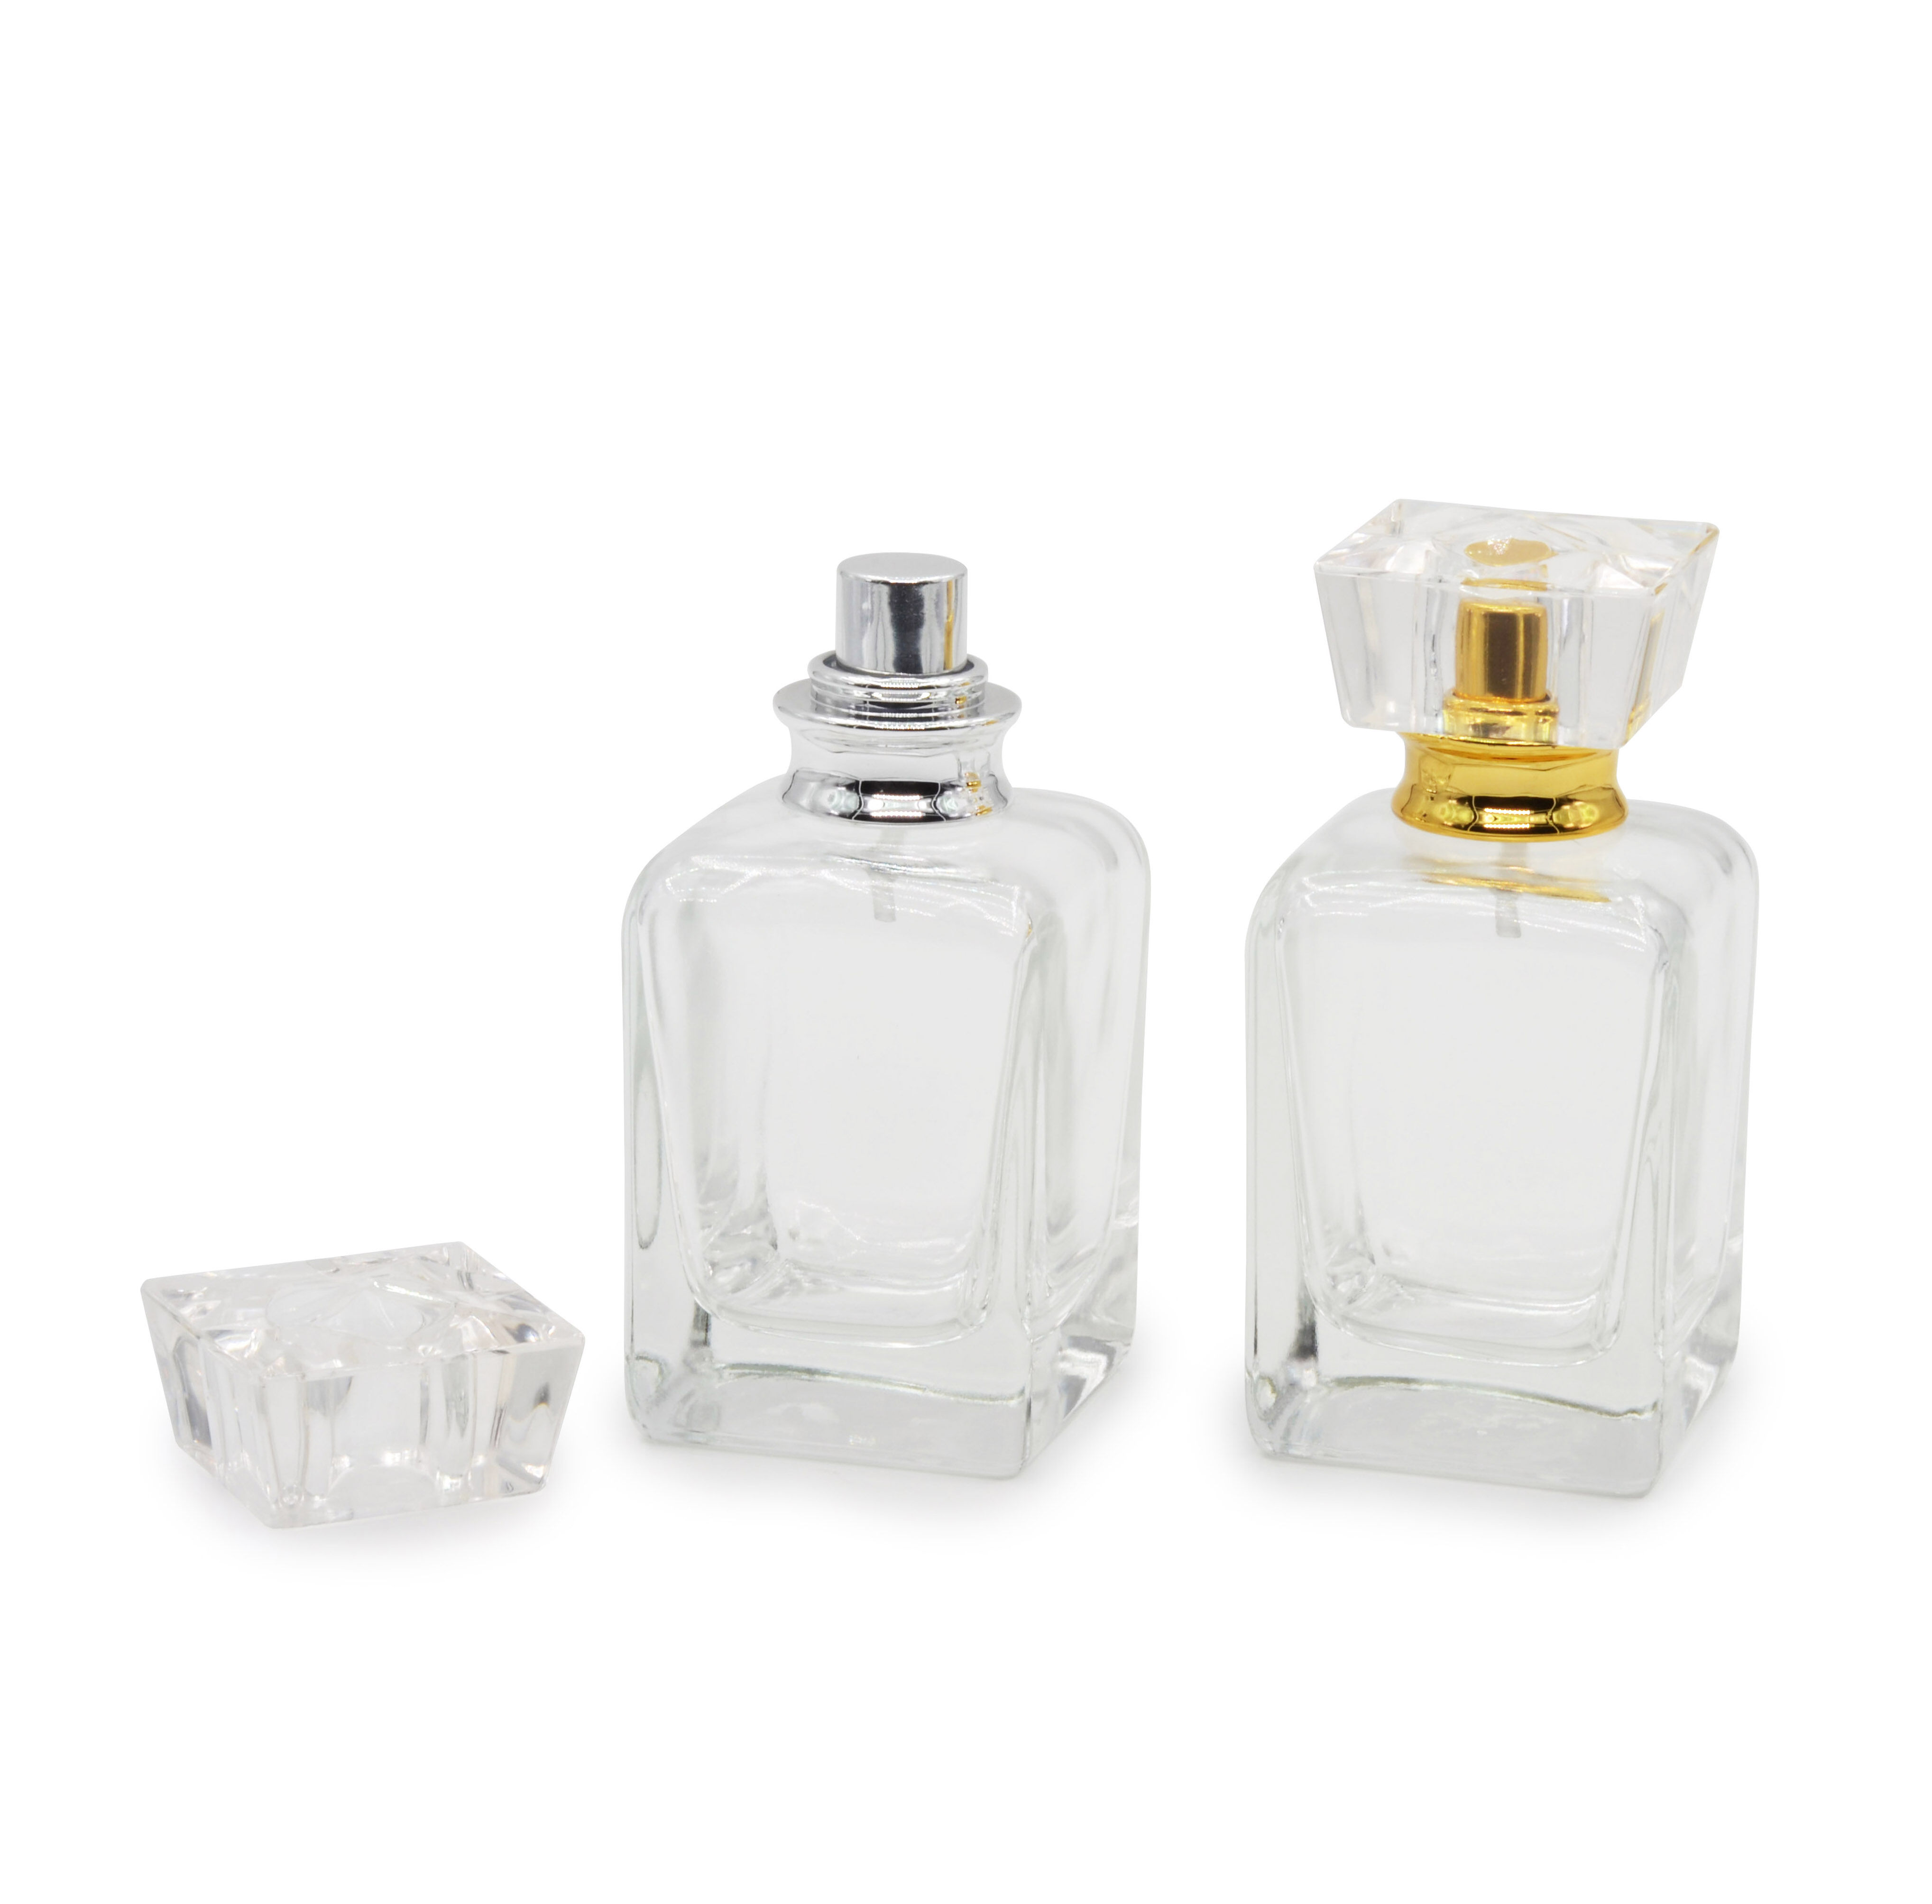 Unique Perfume Bottle Design  Perfume bottles, Perfume, Perfume